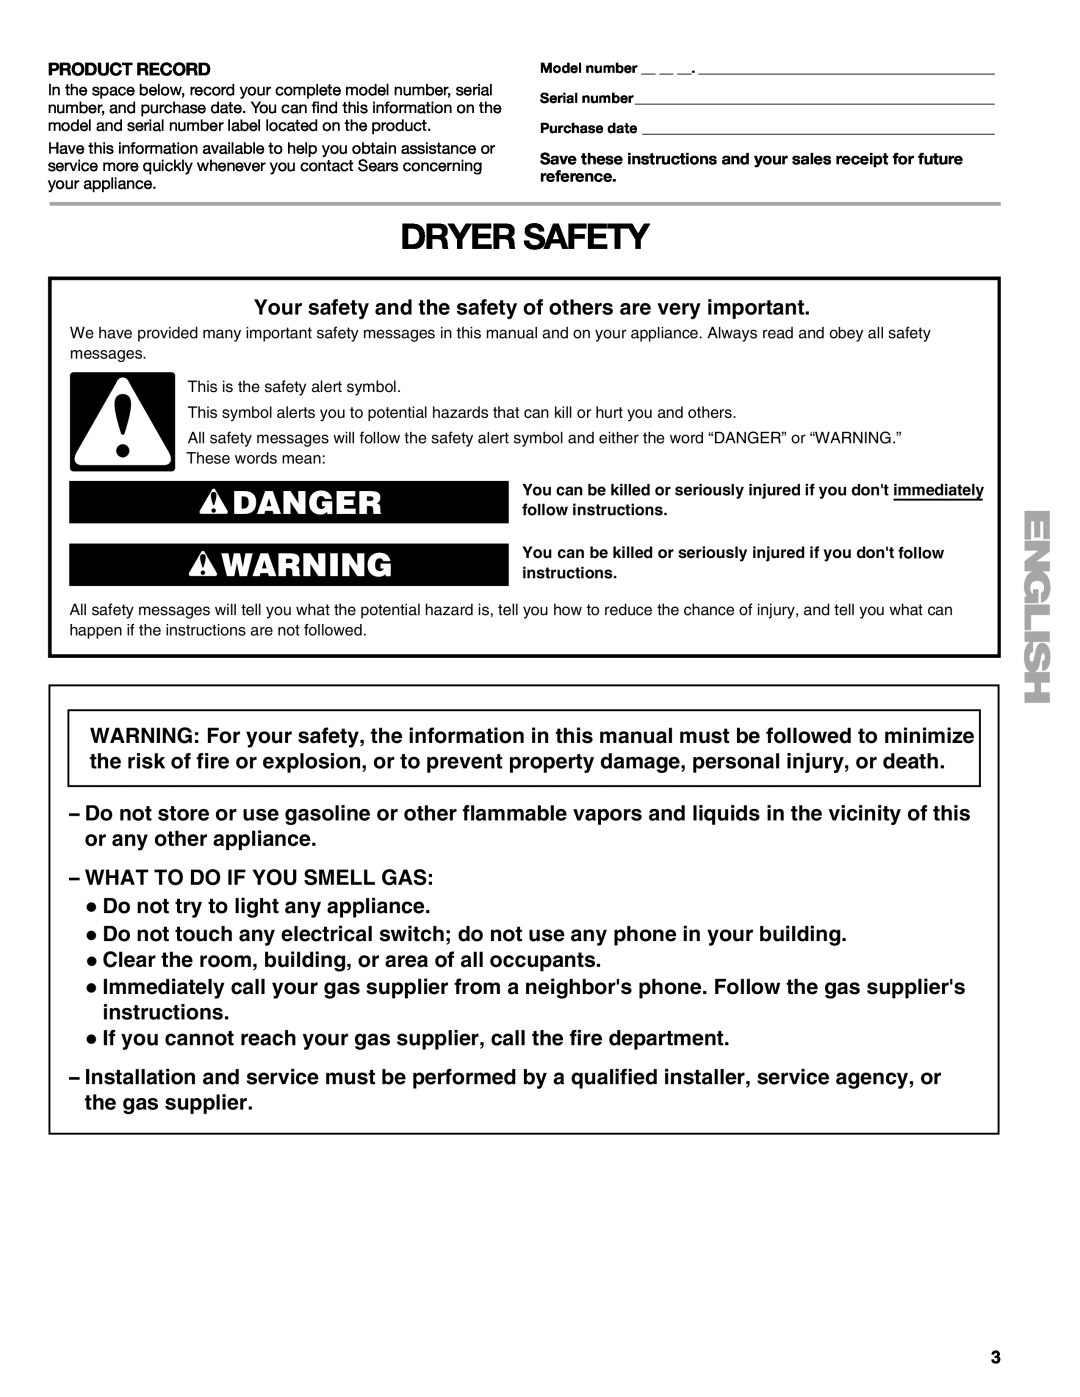 Sears 110.9708, 9709 manual Dryer Safety, Danger 